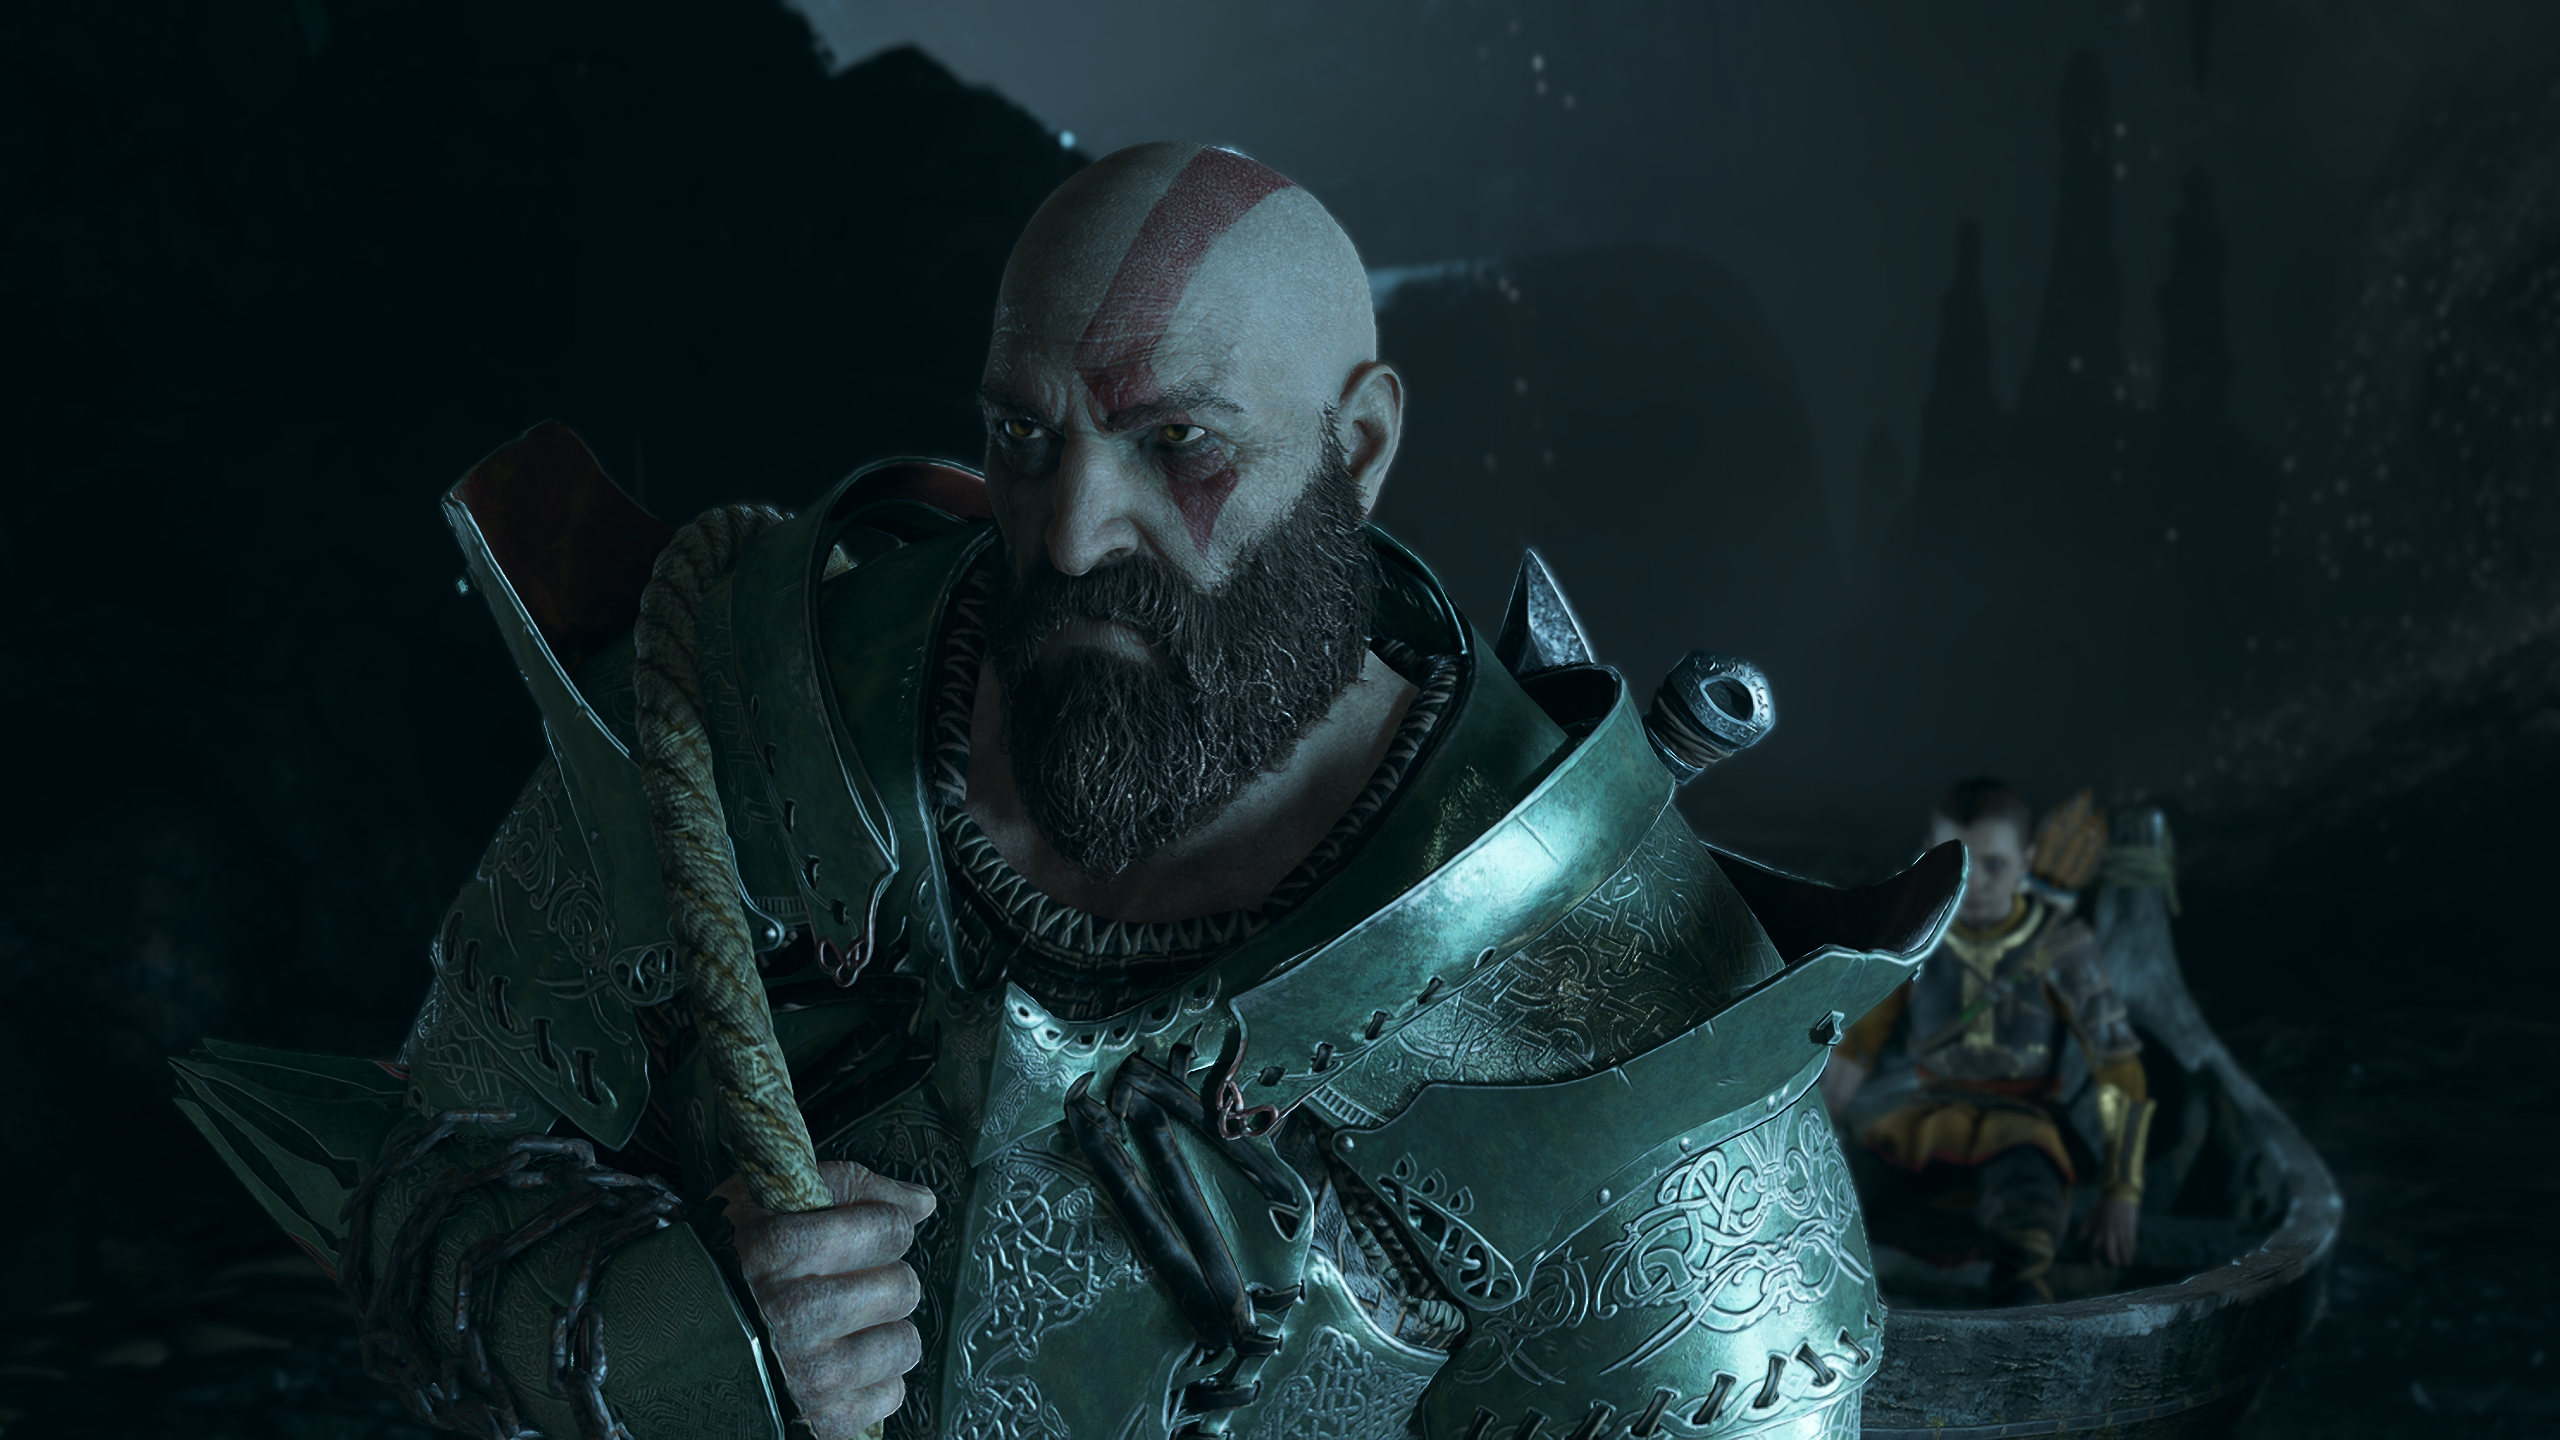 God Of War Kratos Atreus Digital Art Video Games 2560x1440